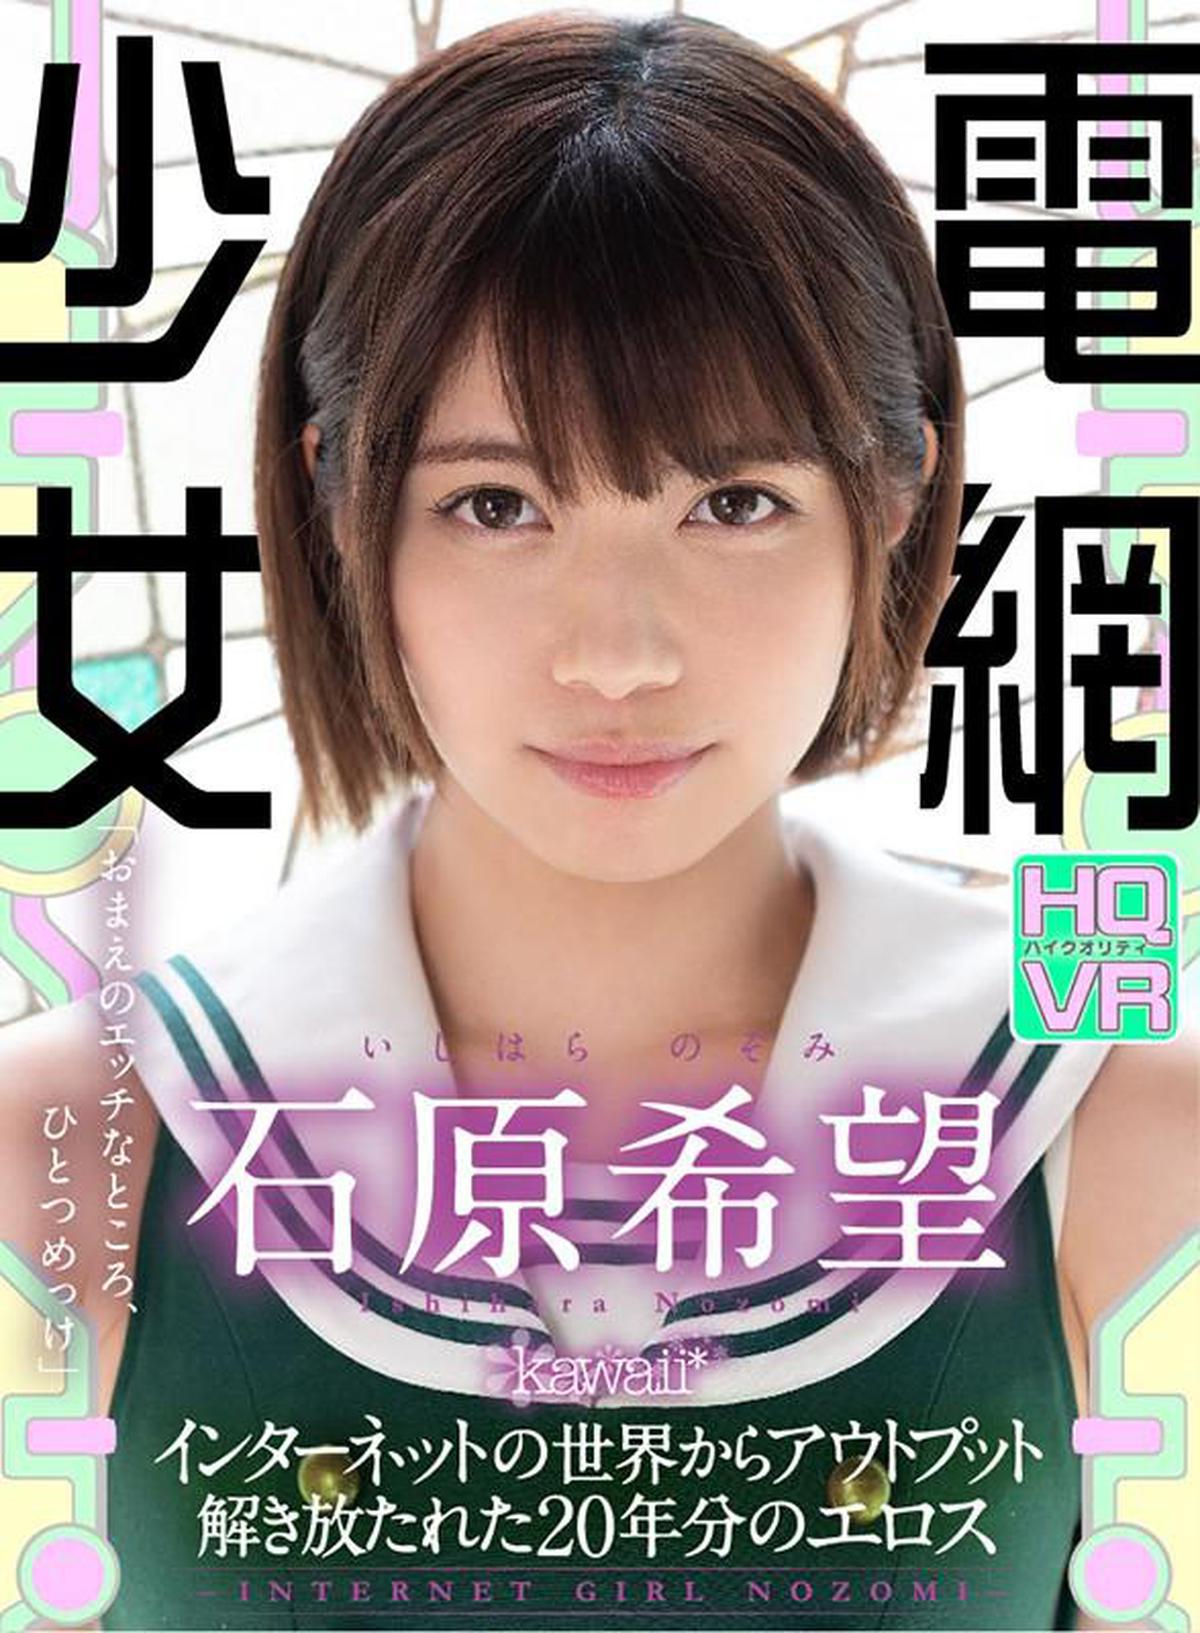 (VR) KAVR-097 Electric Net Girl -INTERNET GIRL NOZOMI- Déchaîne 20 ans d'Eros Ishihara Nozomi